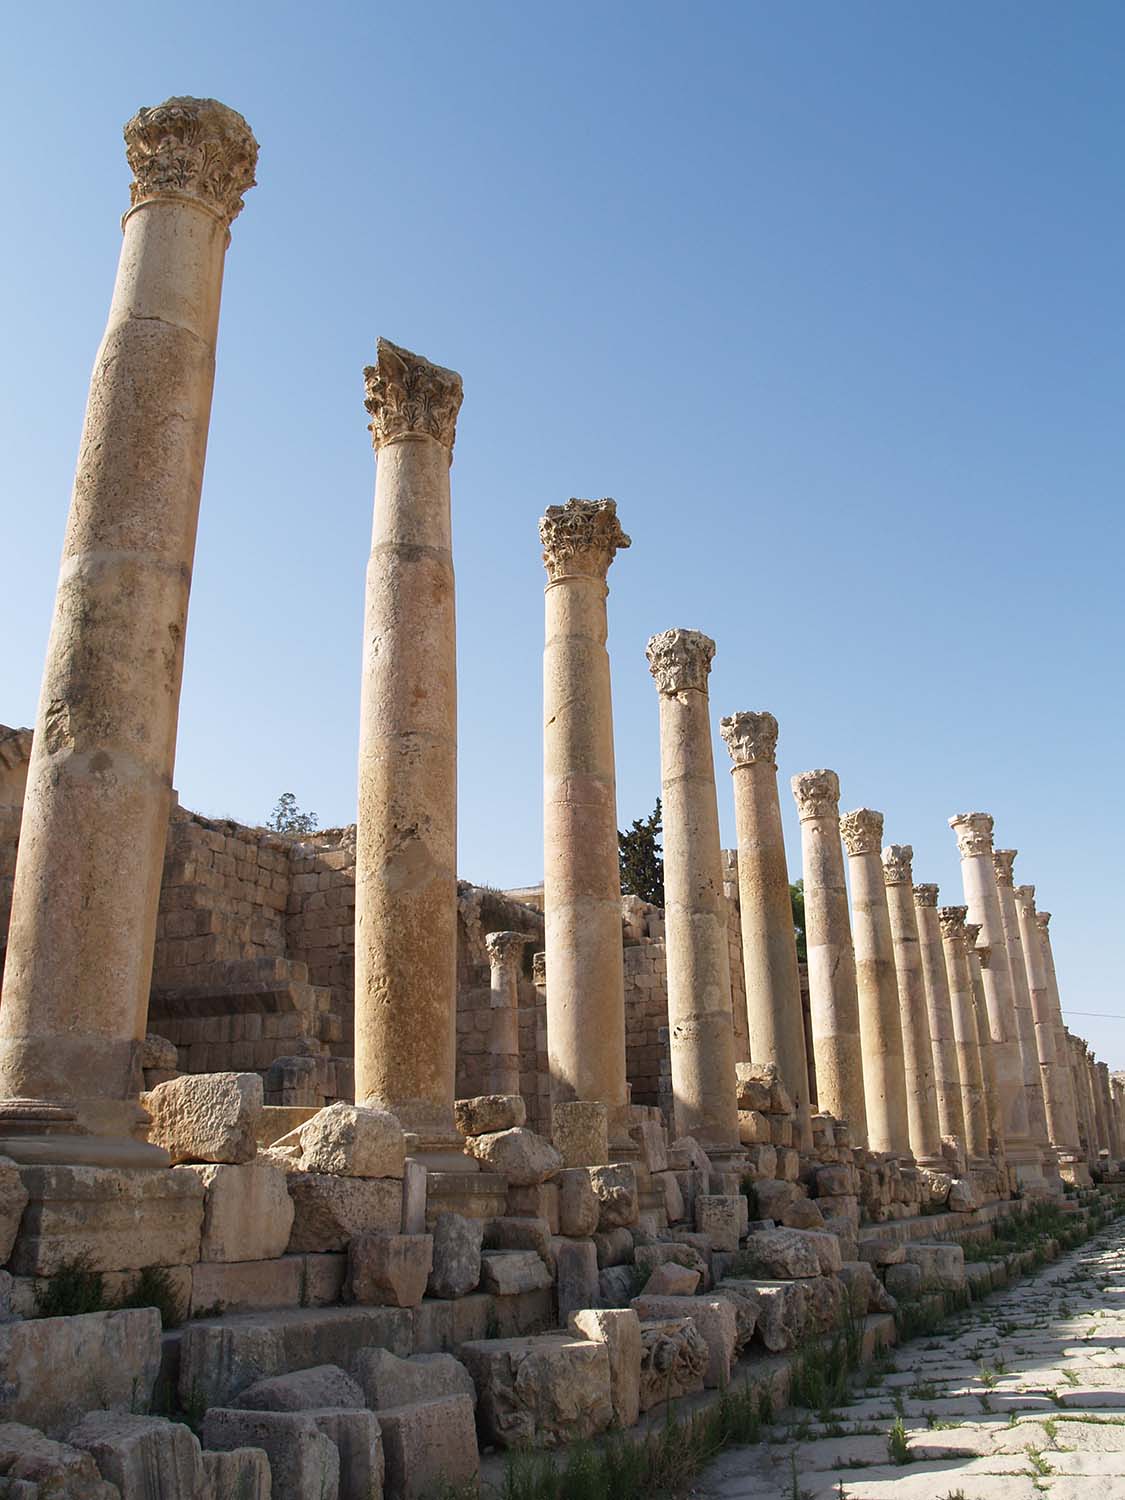 View of colonnade along the Cardo Maximus